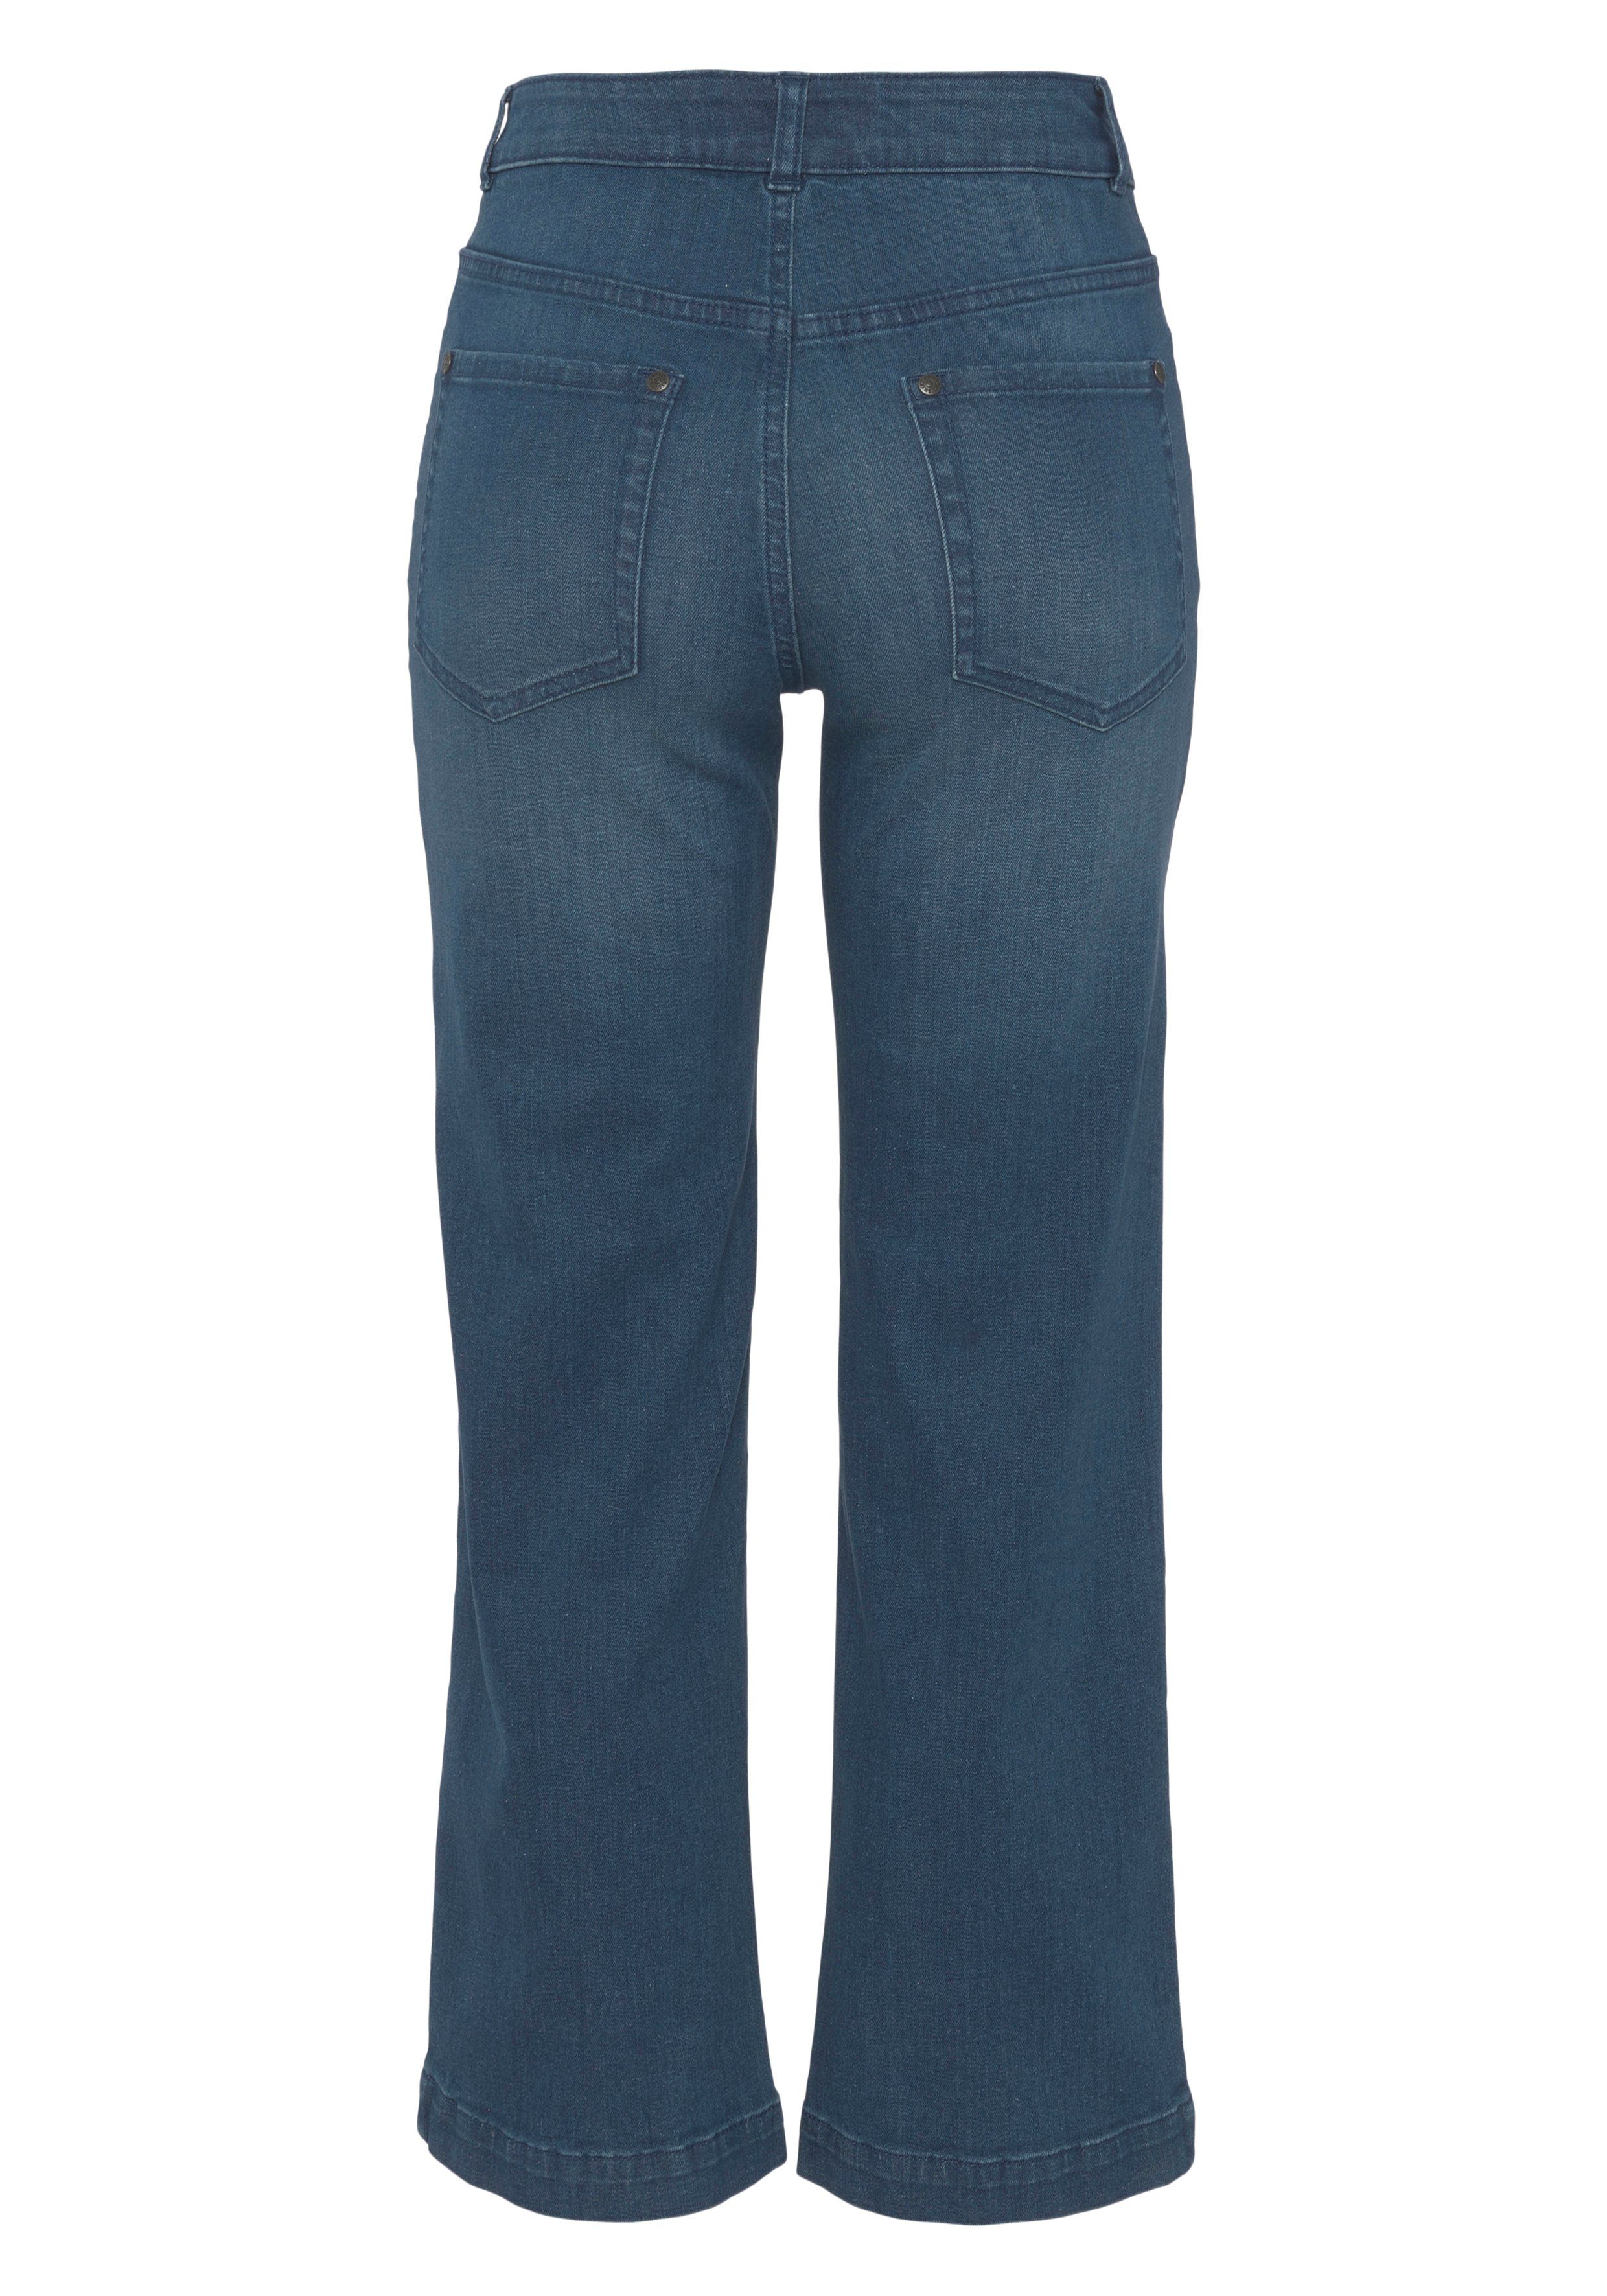 Arizona Waist Jeans blue used High Weite